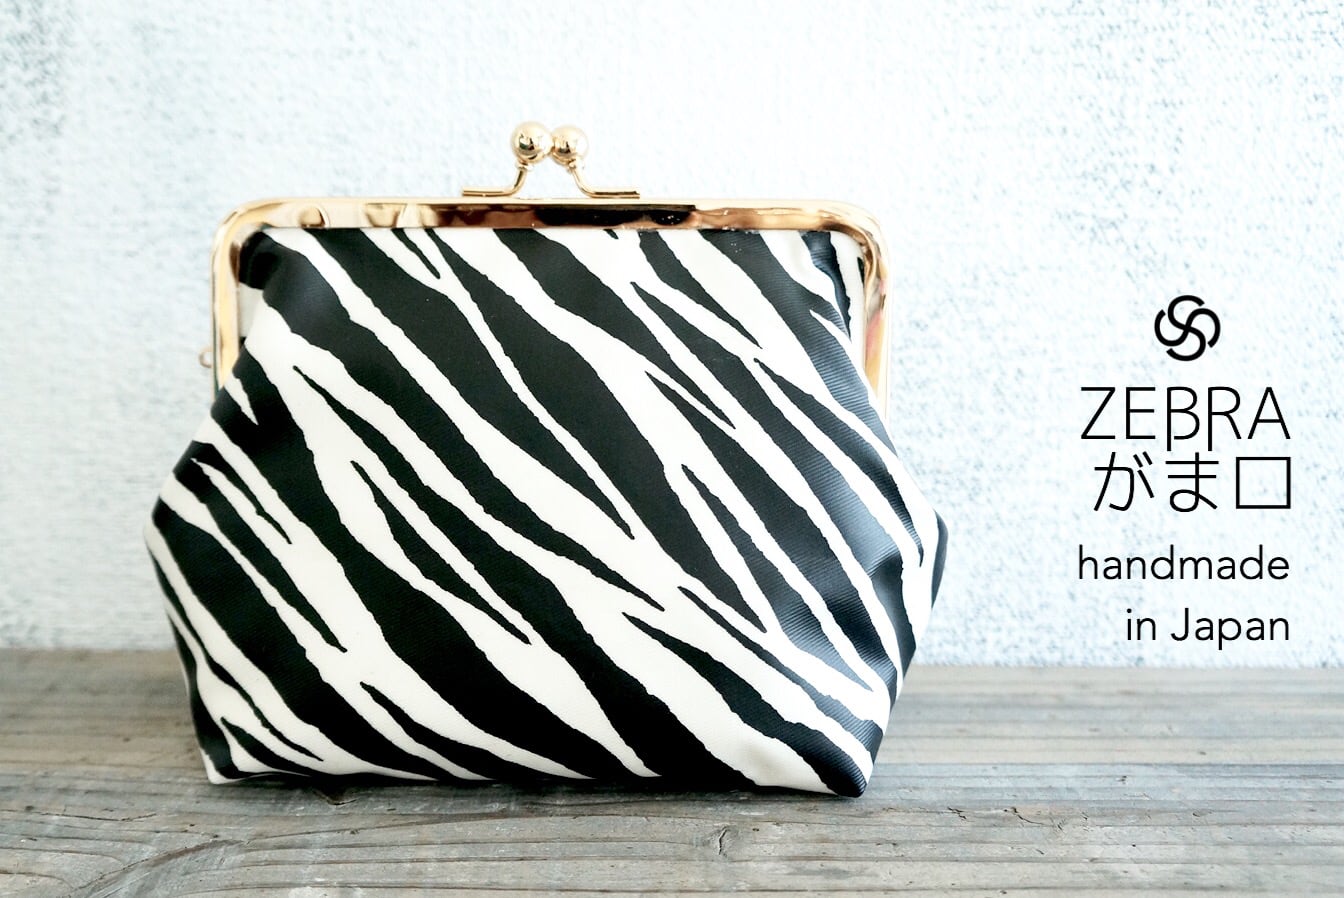 zebra pattern gamaguchi pouch handmade ● 手作りゼブラパターンたっぷりサイズがま口ポーチハンドメイド